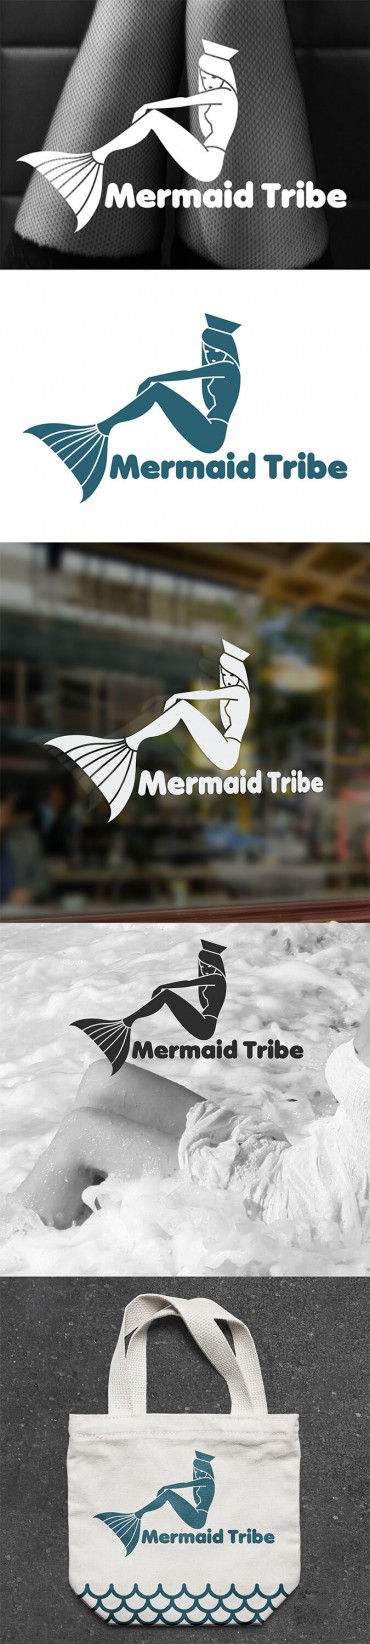 Логотип Mermaid Tribe (Доставка колготок), 2017 